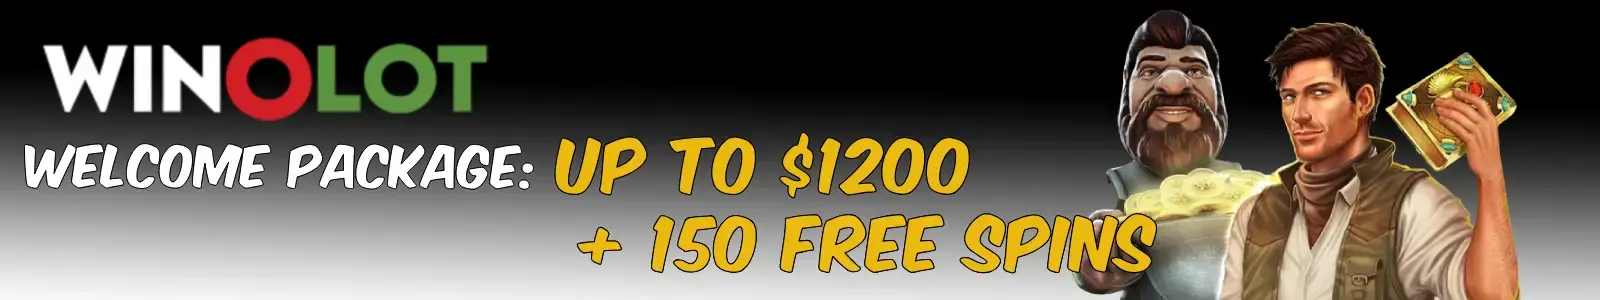 Winolot Casino Welcom Bonuses up to $1200 and 150 free spins